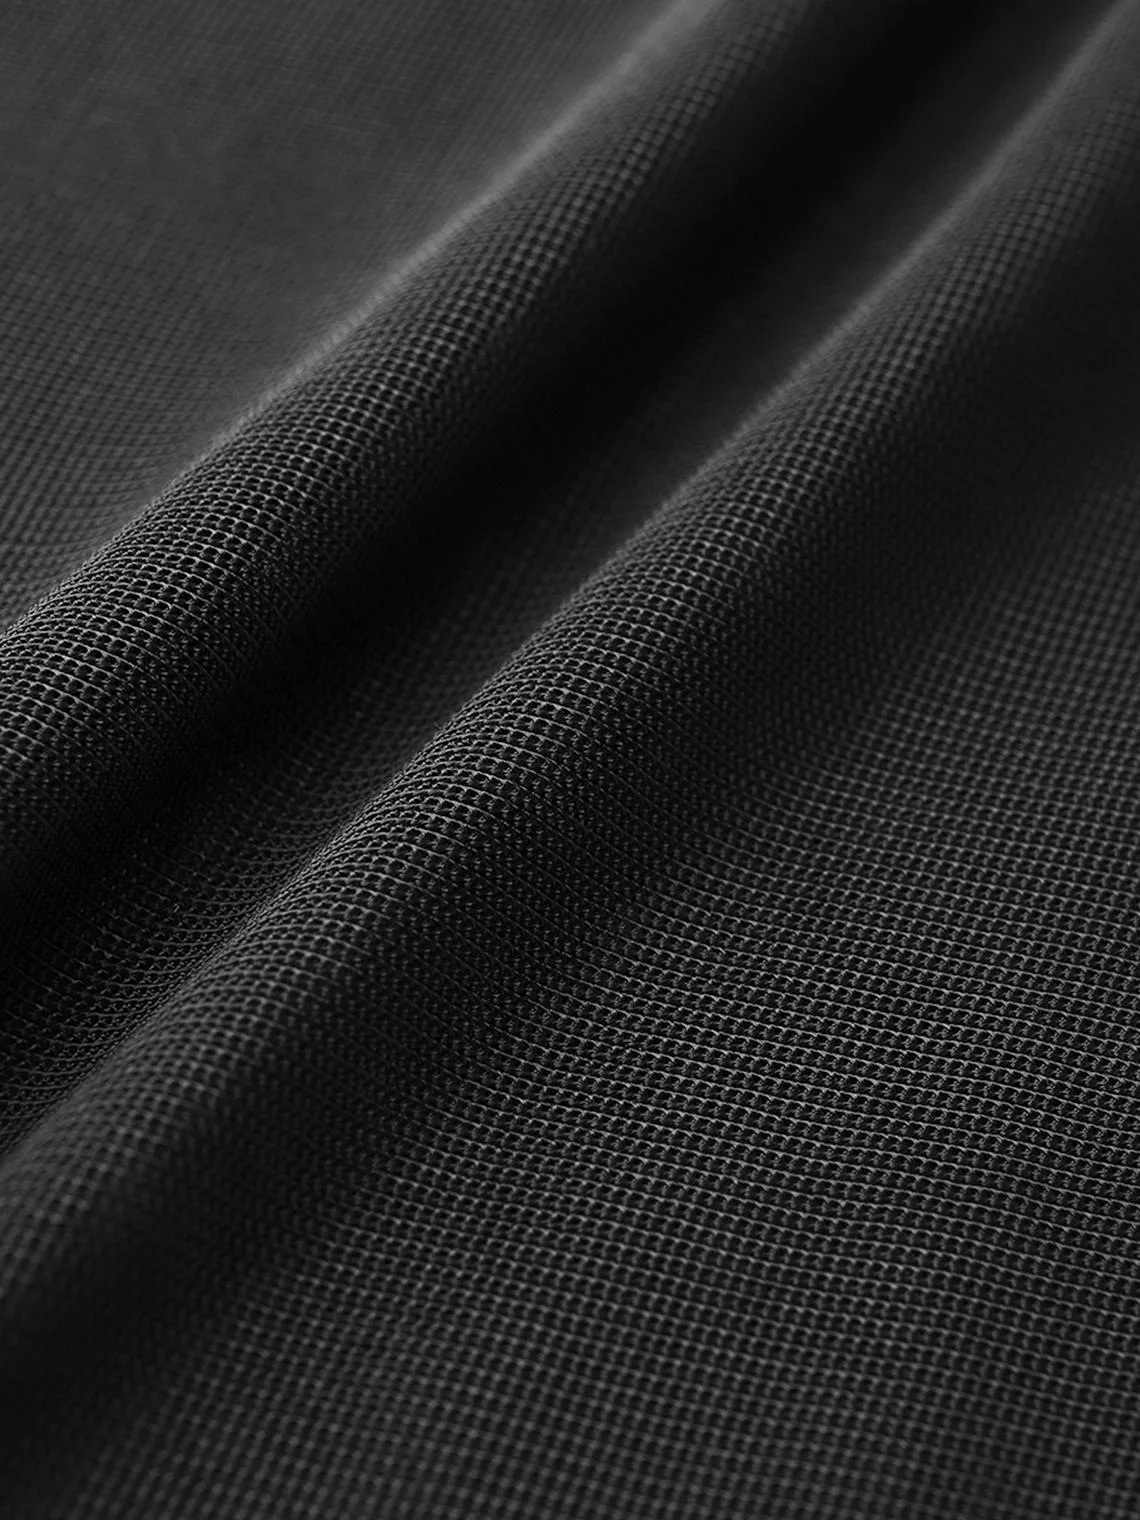 【Final Sale】Edgy Black Mesh Asymmetrical Design Arm Sleeves Bodysuit ...